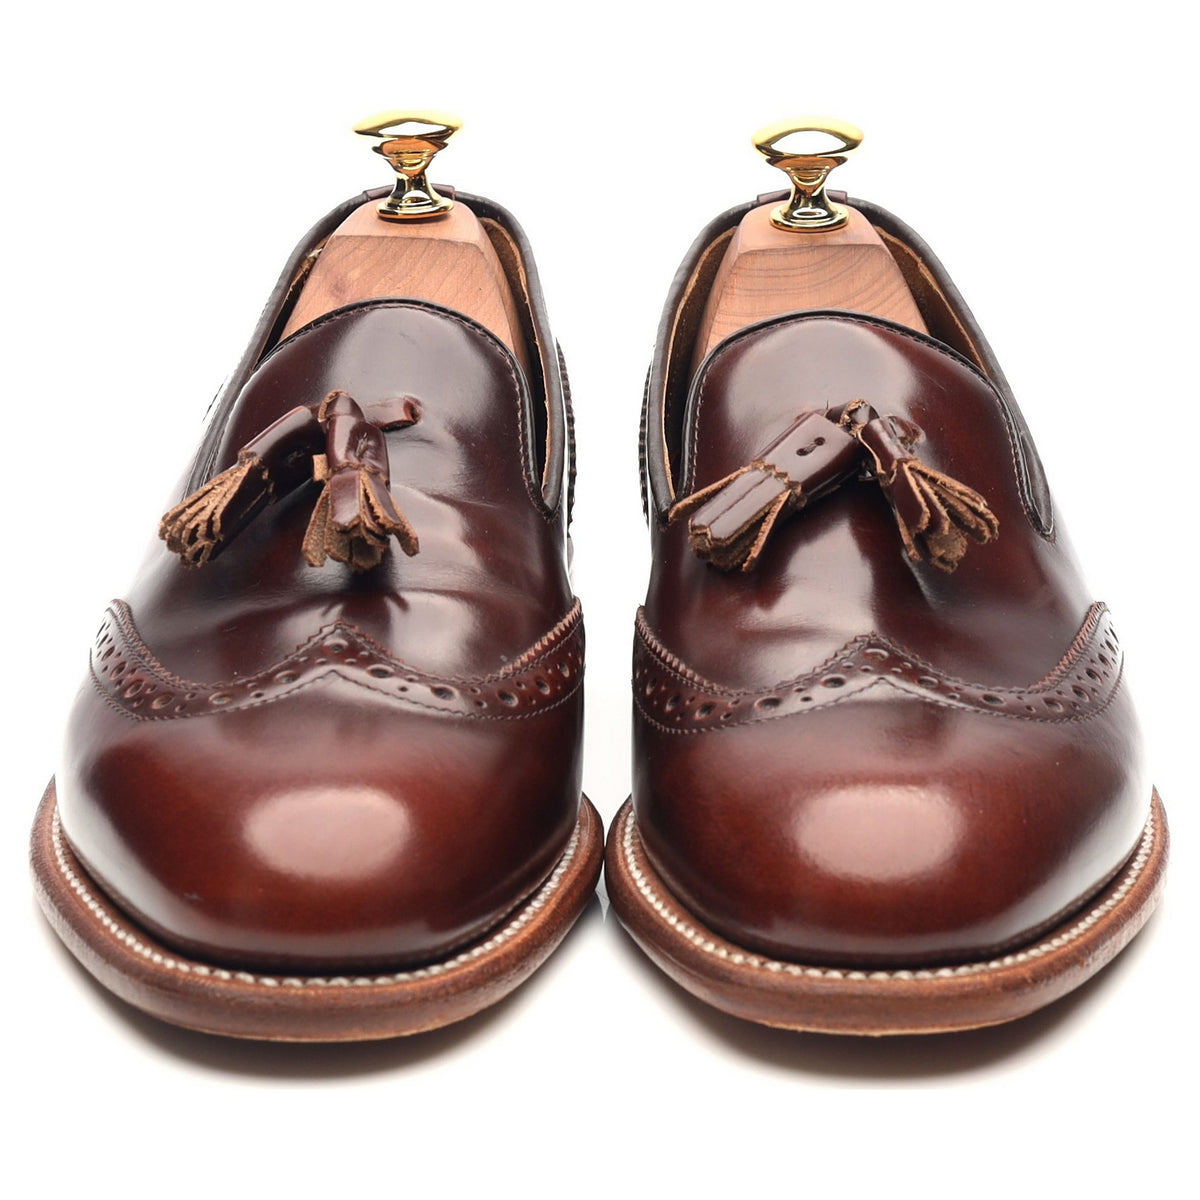 &#39;Monty&#39; Brown Leather Tassel Loafers UK 6 E